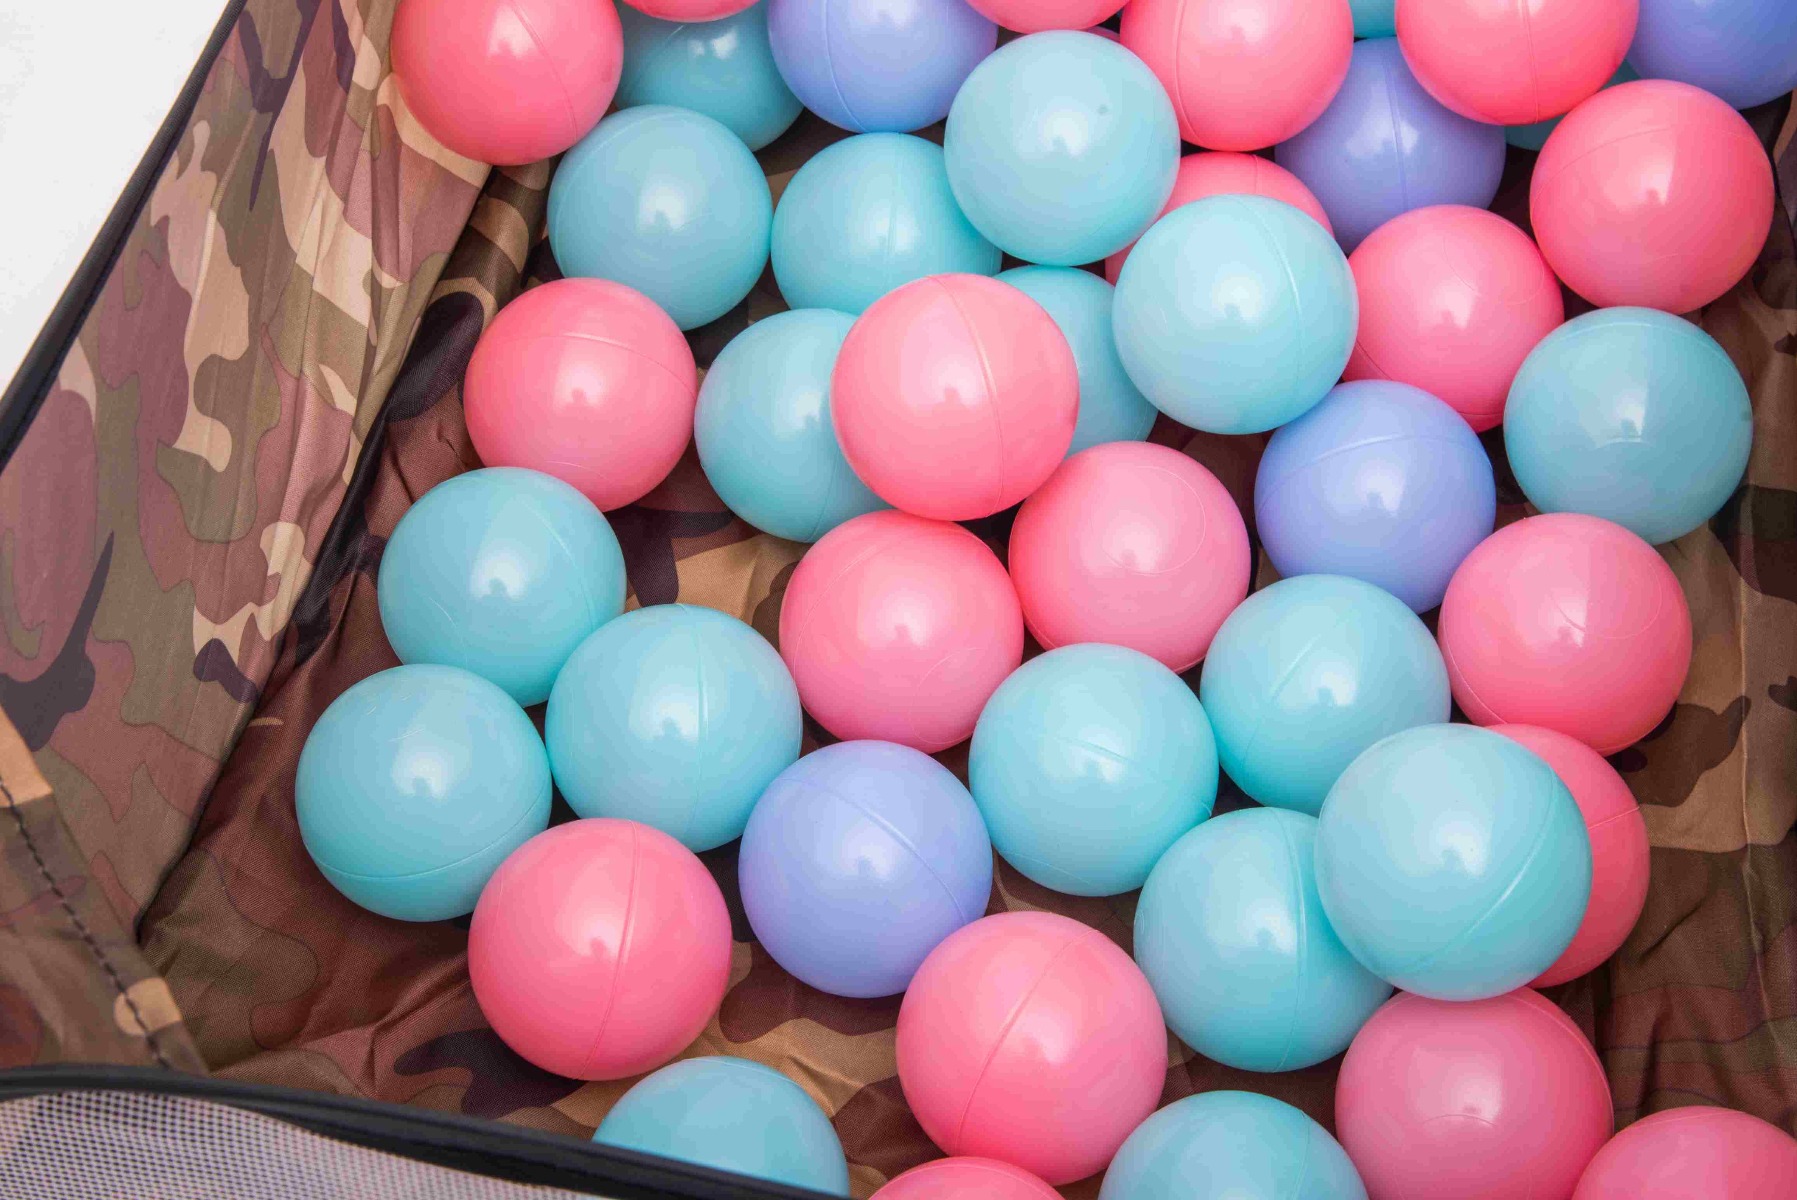 Plastic balls With pools